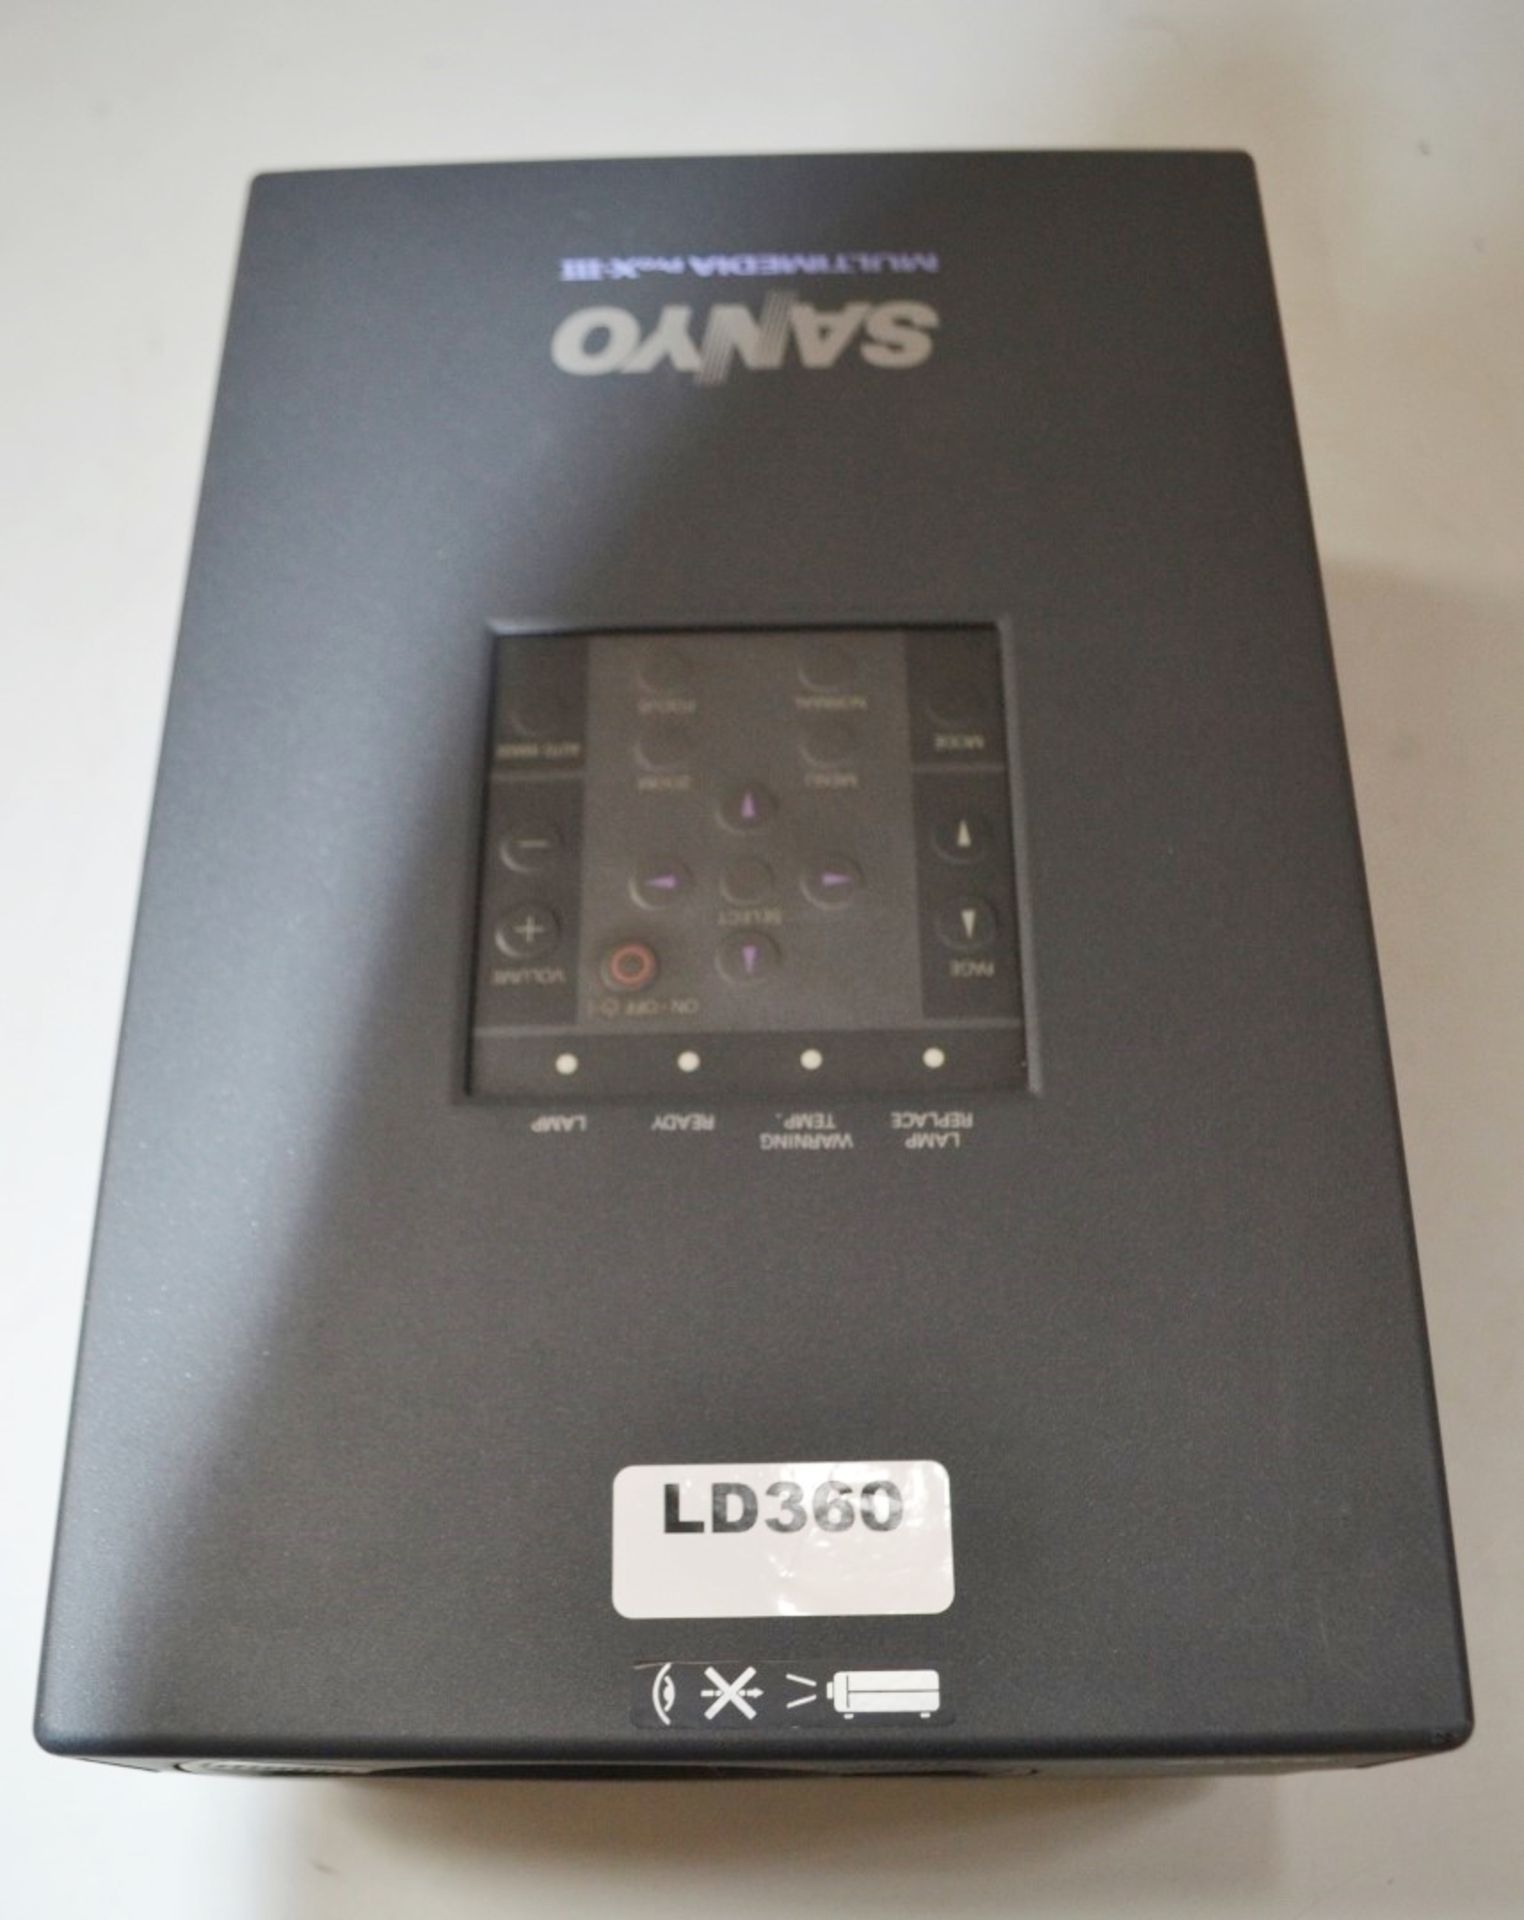 1 x Sanyo Multimedia Projector Pro X III - Ref: LD360 - CL409 - Altrincham WA14 - Image 5 of 5